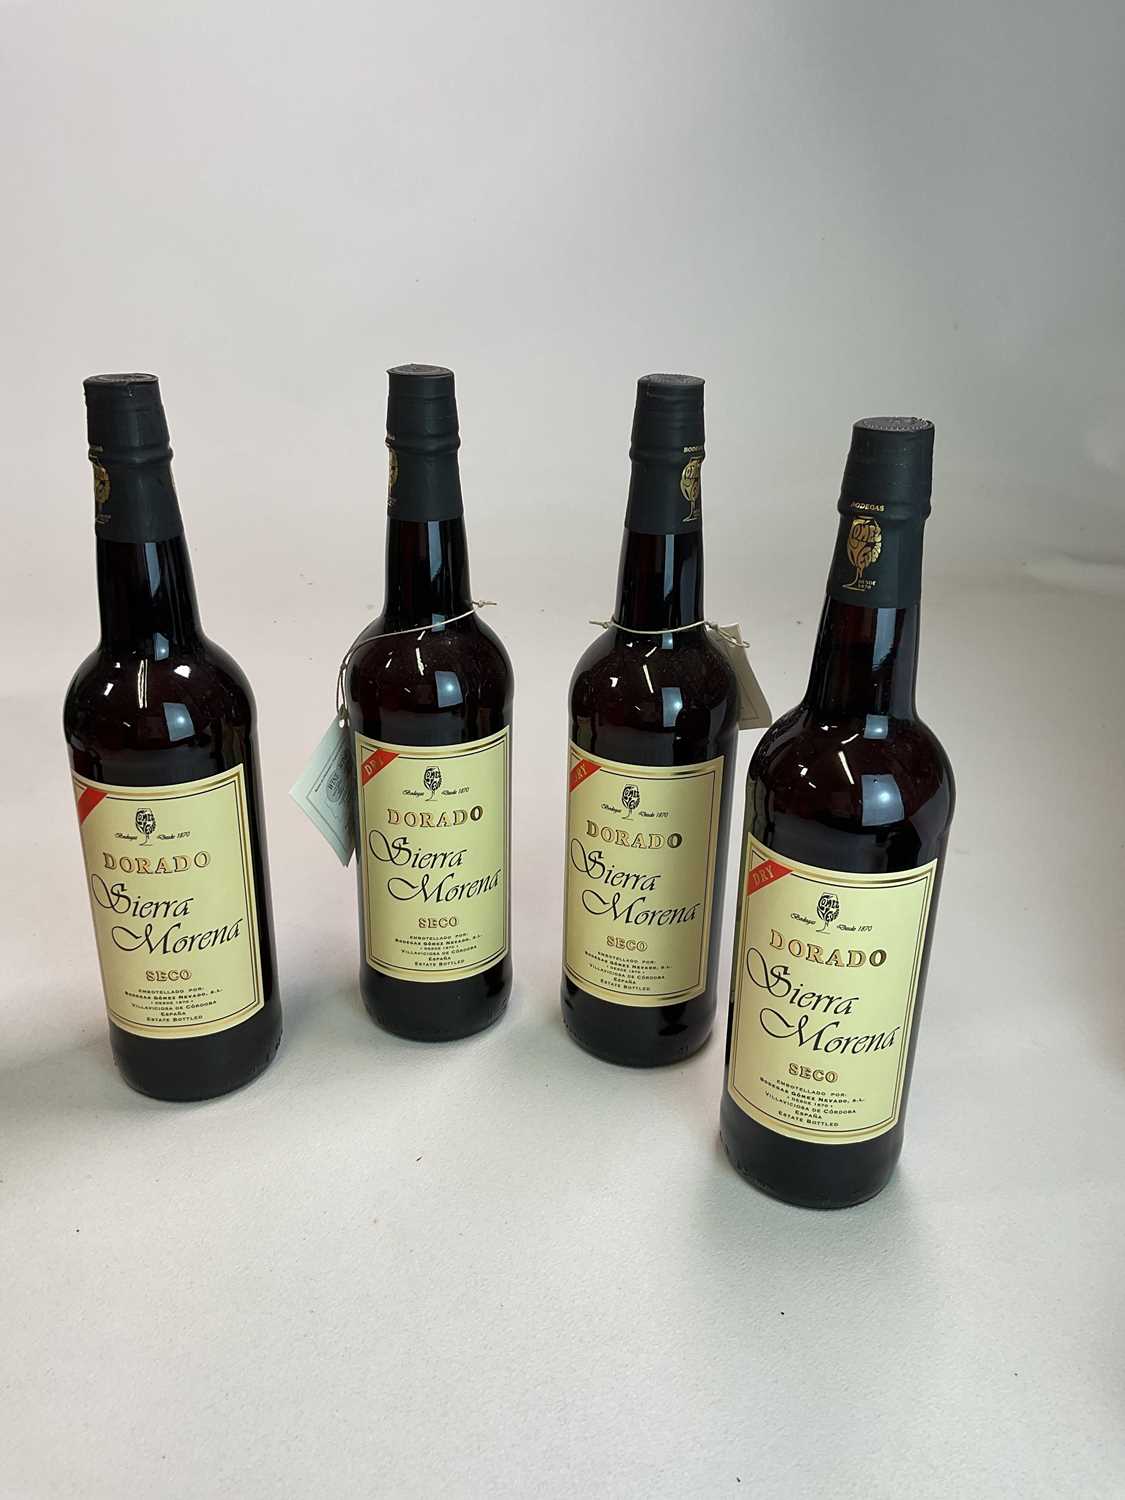 RED FORTIFIED WINE; four bottles of Dorado Sierra Morena seco in original cardboard box (4).